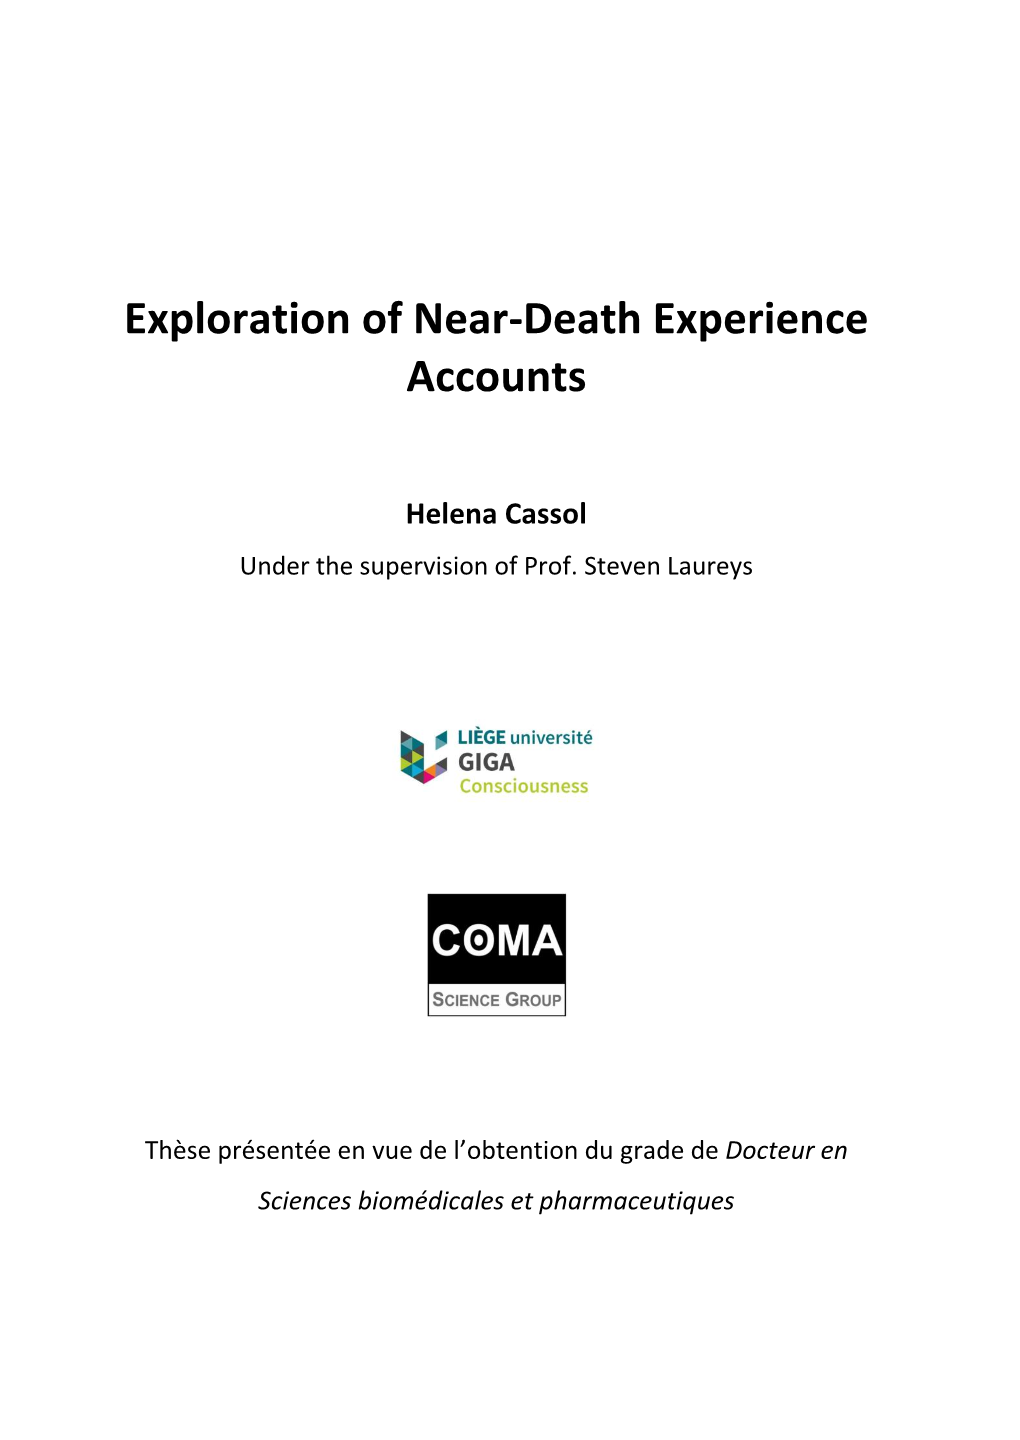 Exploration of Near-Death Experience Accounts